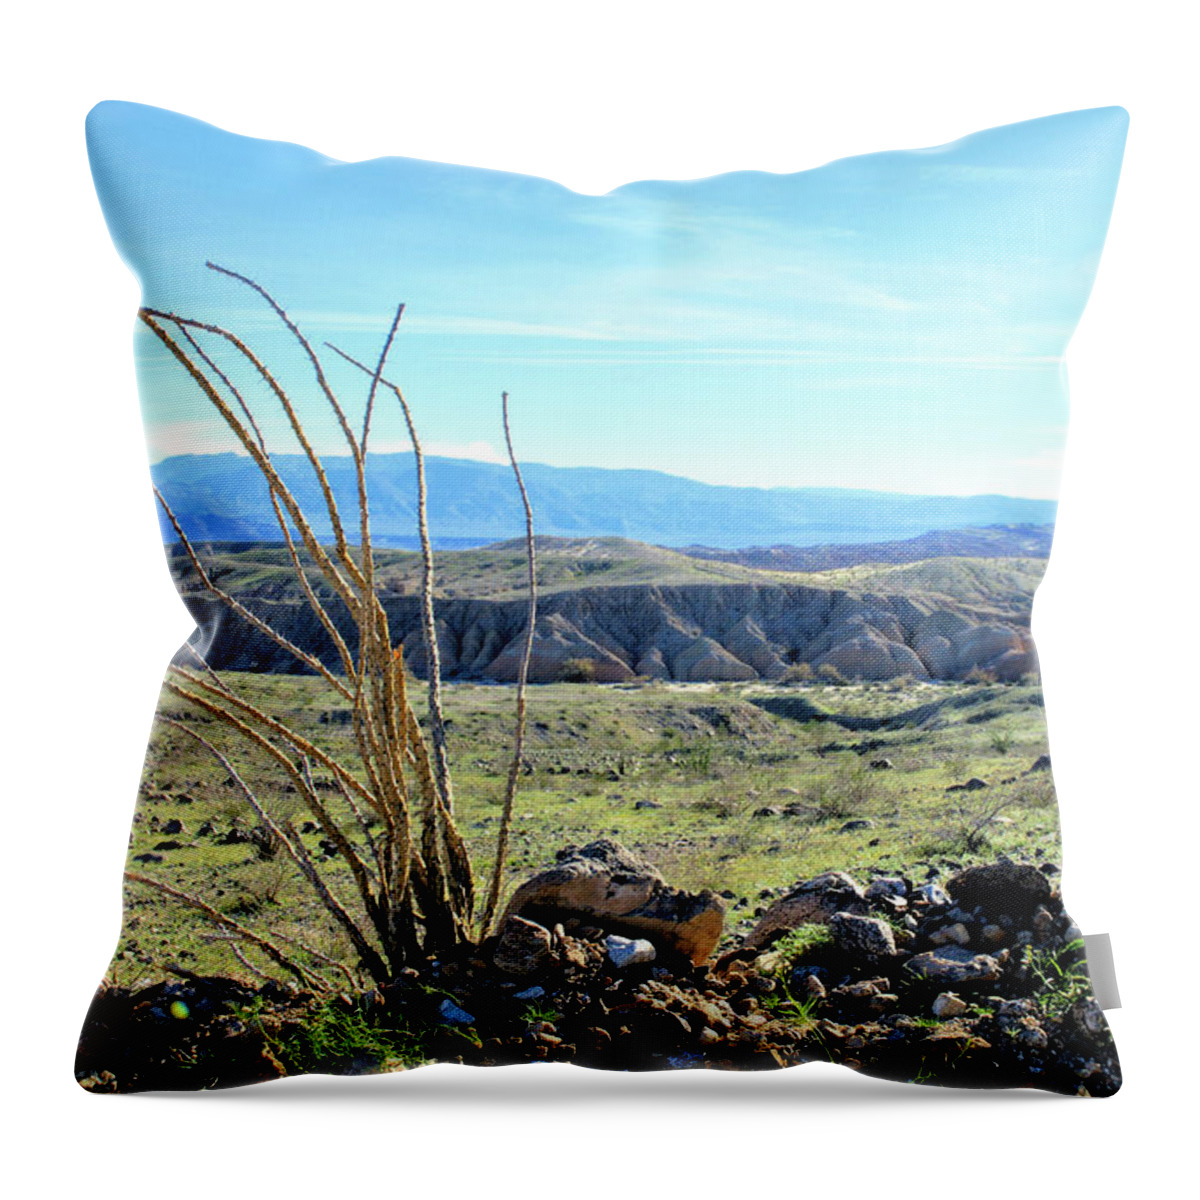 Anza Borrego Desert State Park Throw Pillow featuring the photograph Desert After The Rains by Michelle Joseph-Long